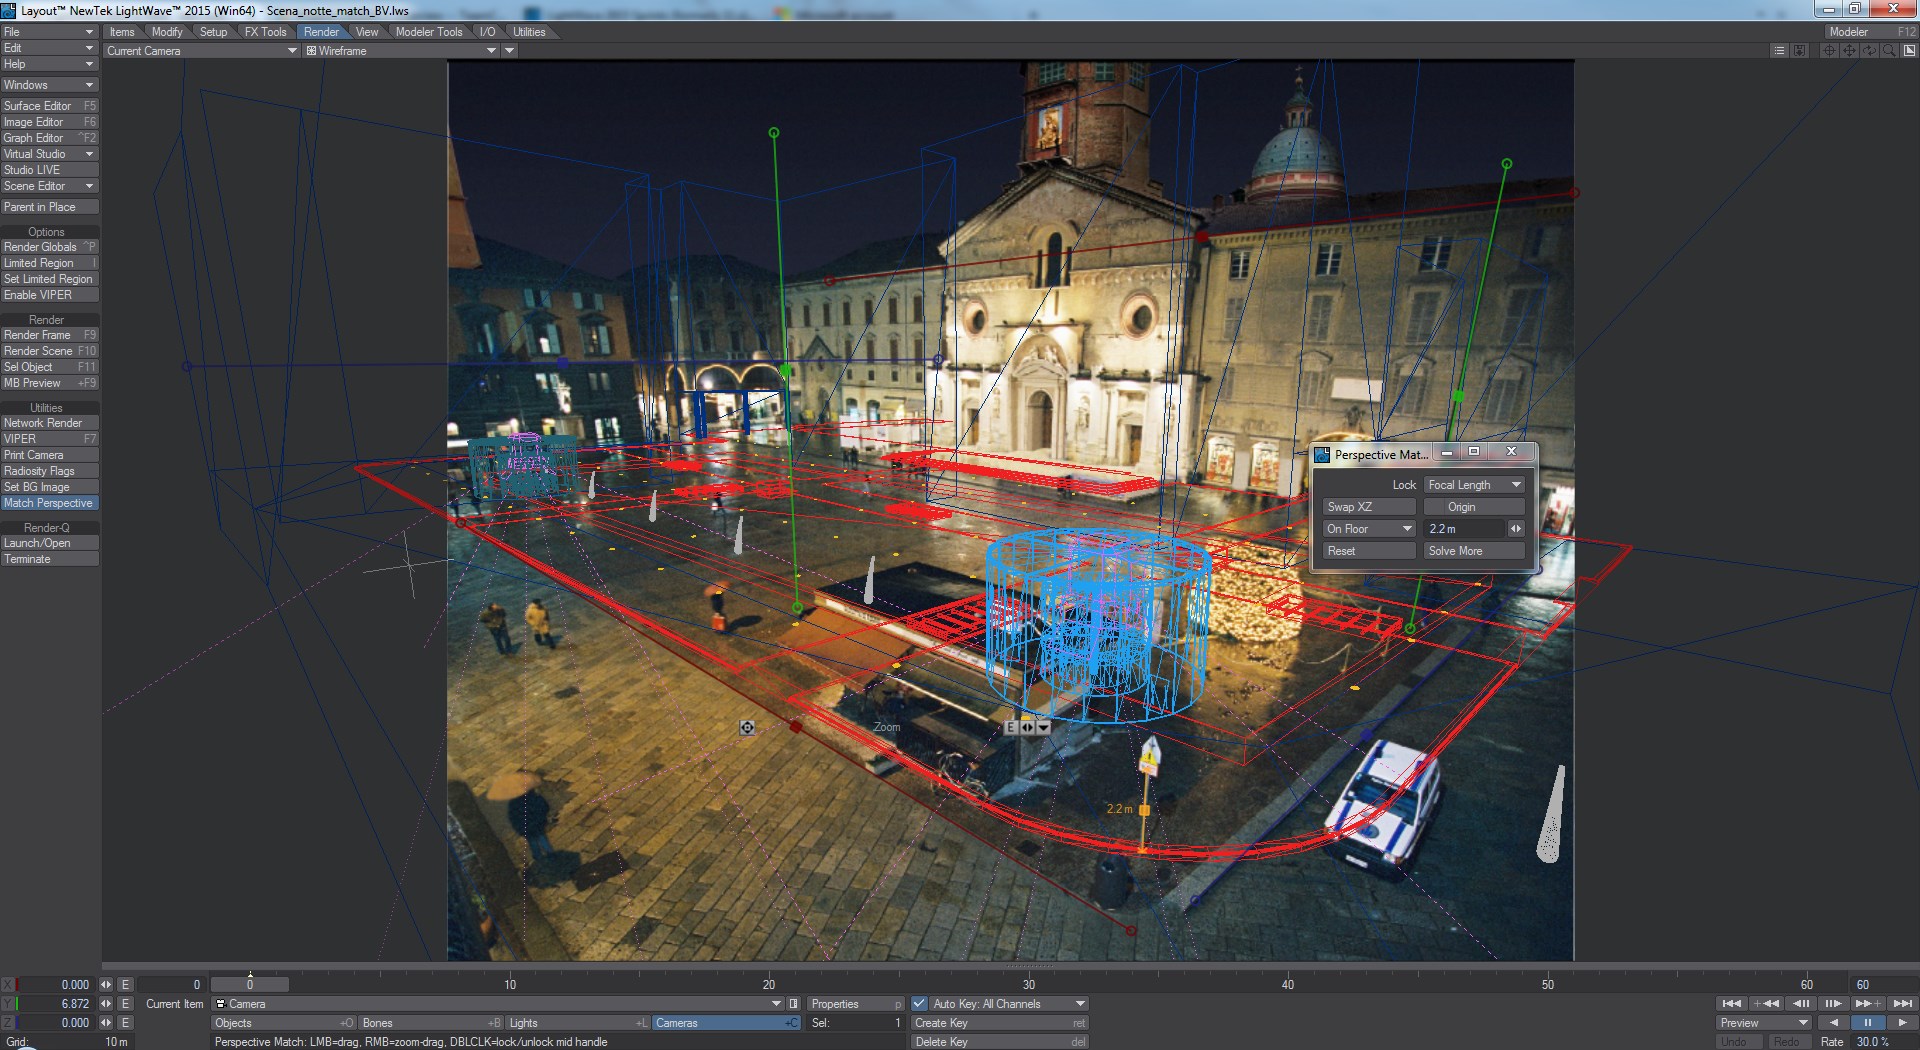 LightWave 3D Group Launches LightWave 2015 3D Software